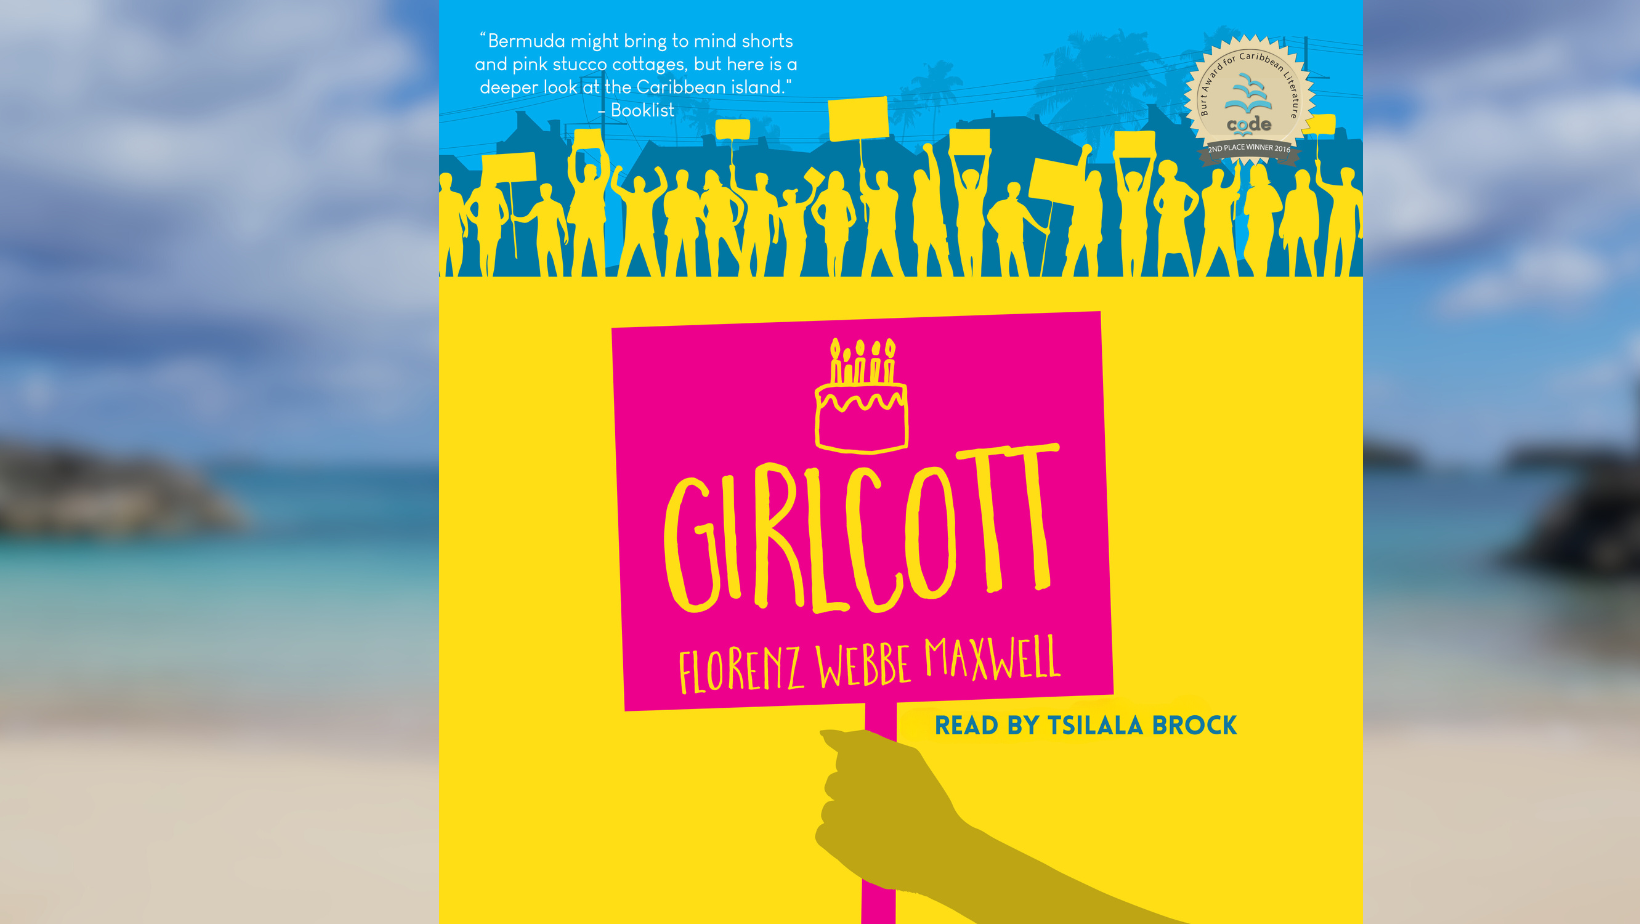 Girlcott audiobook cover in front of a Bermudian beach